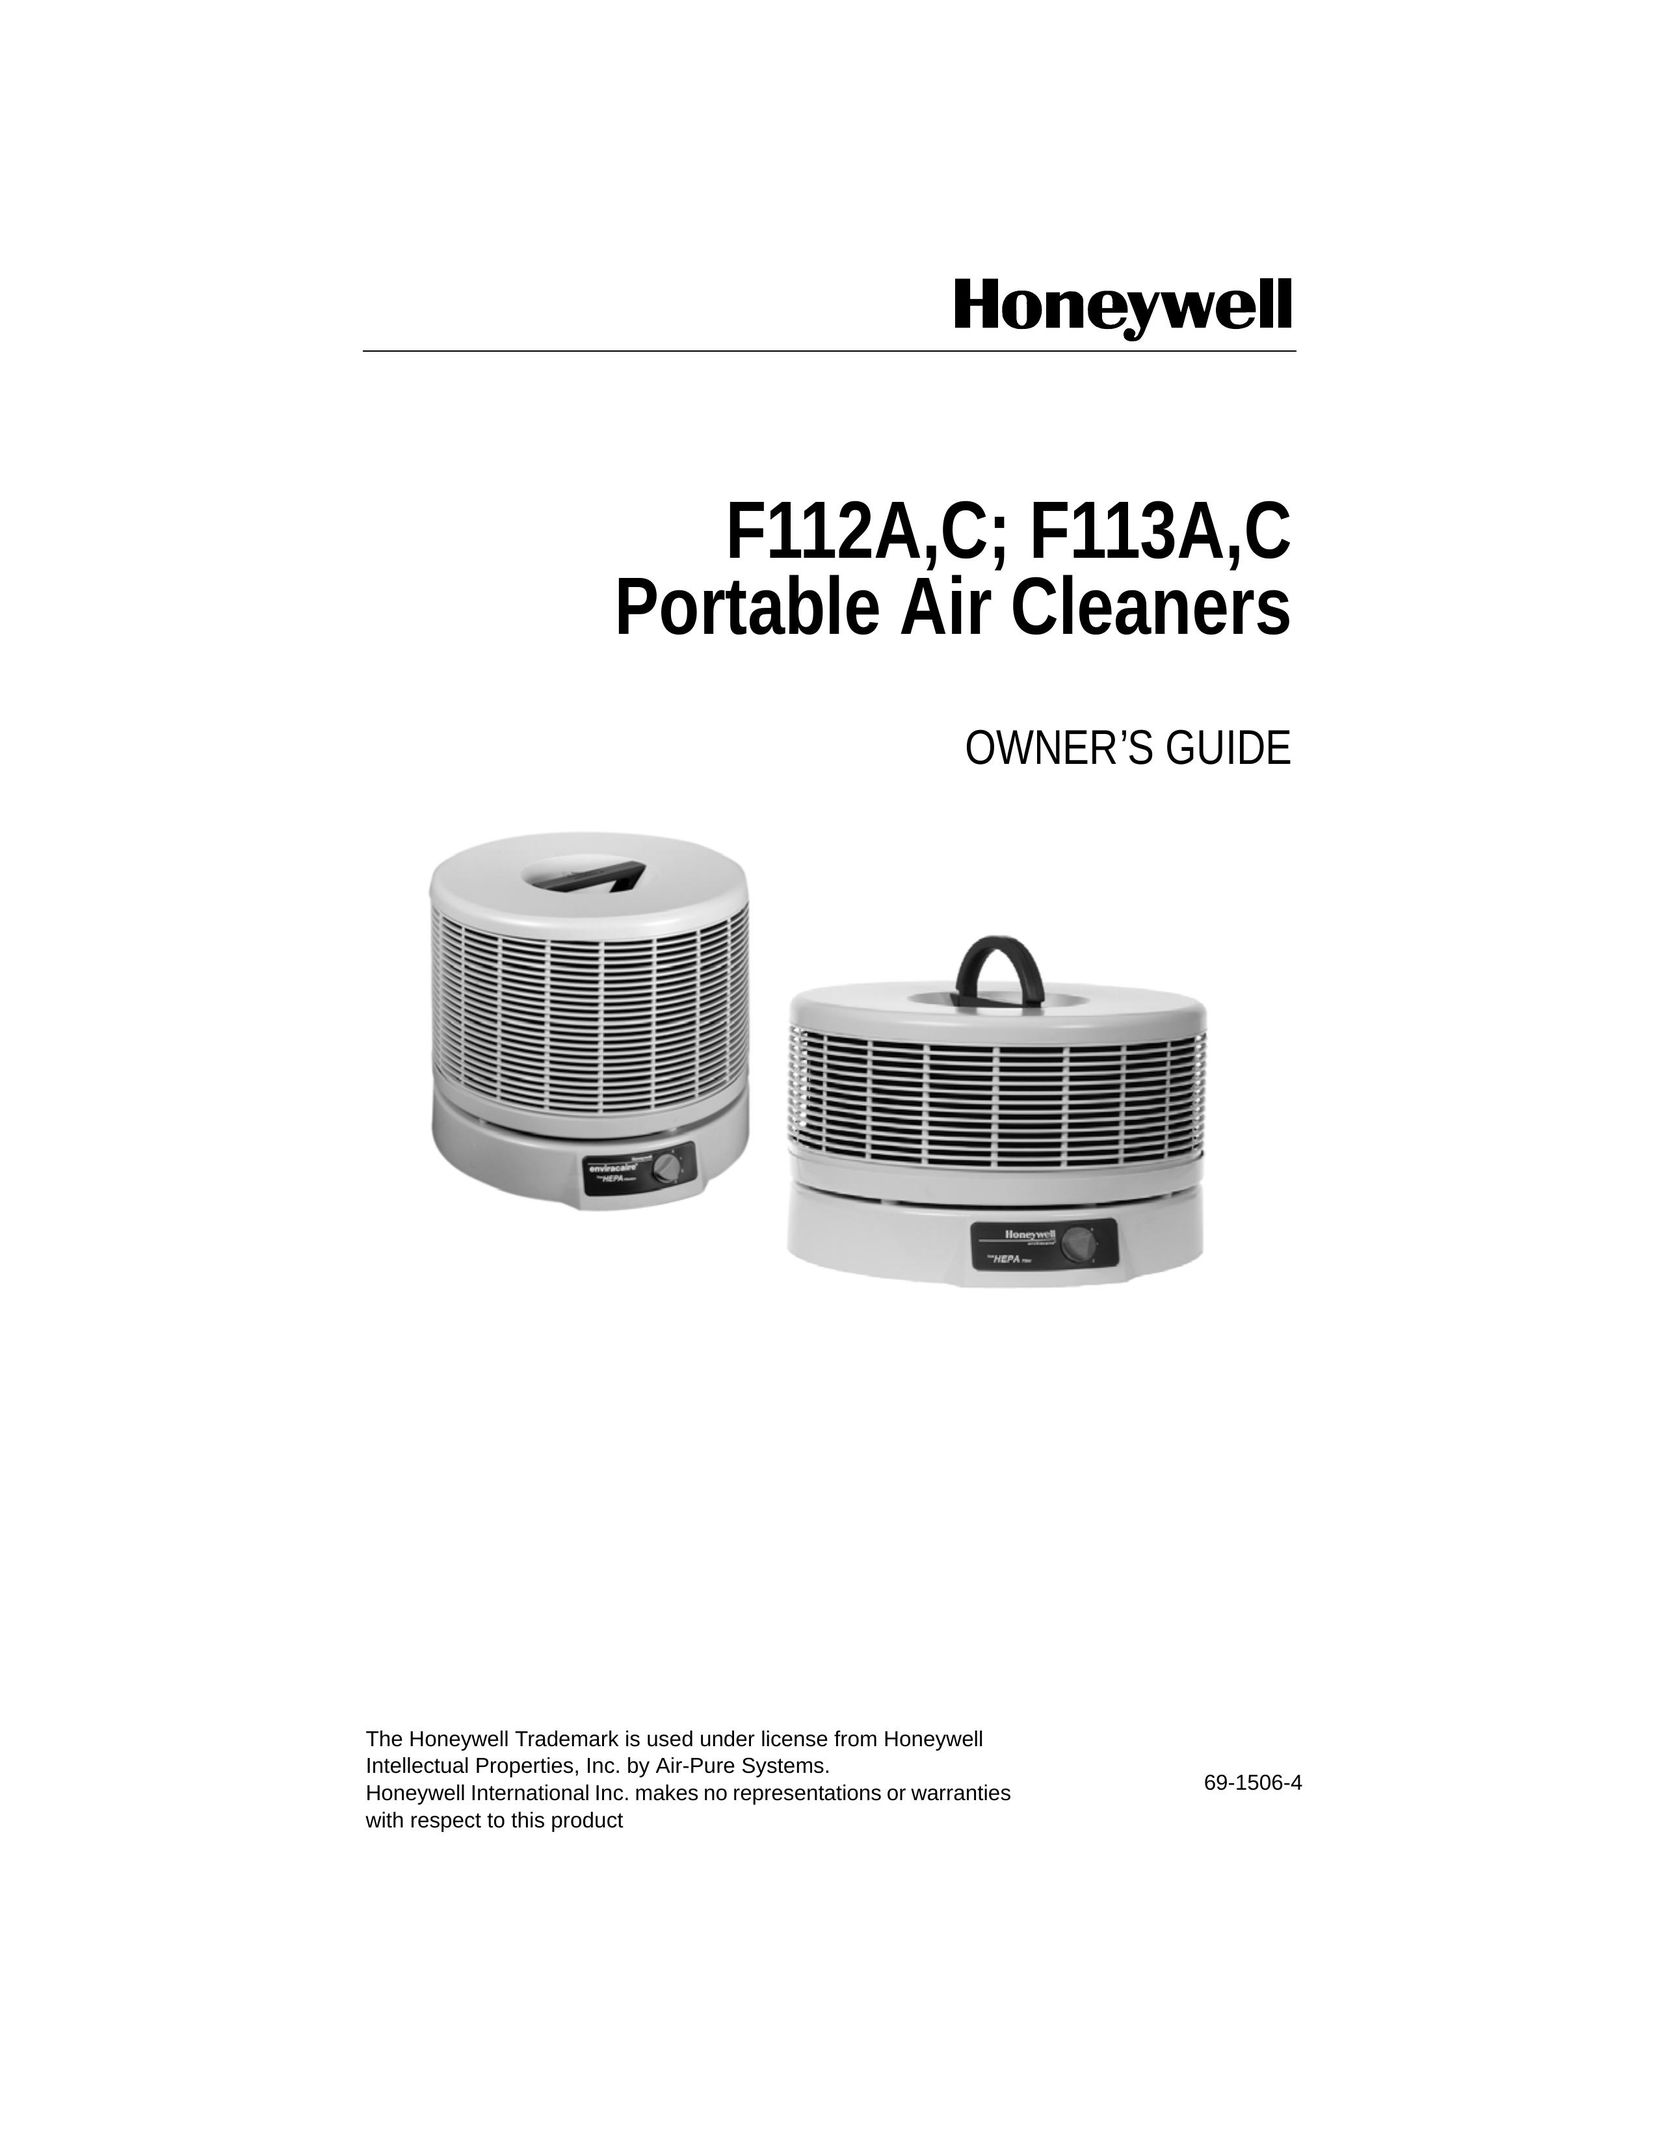 Honeywell F113C Air Cleaner User Manual